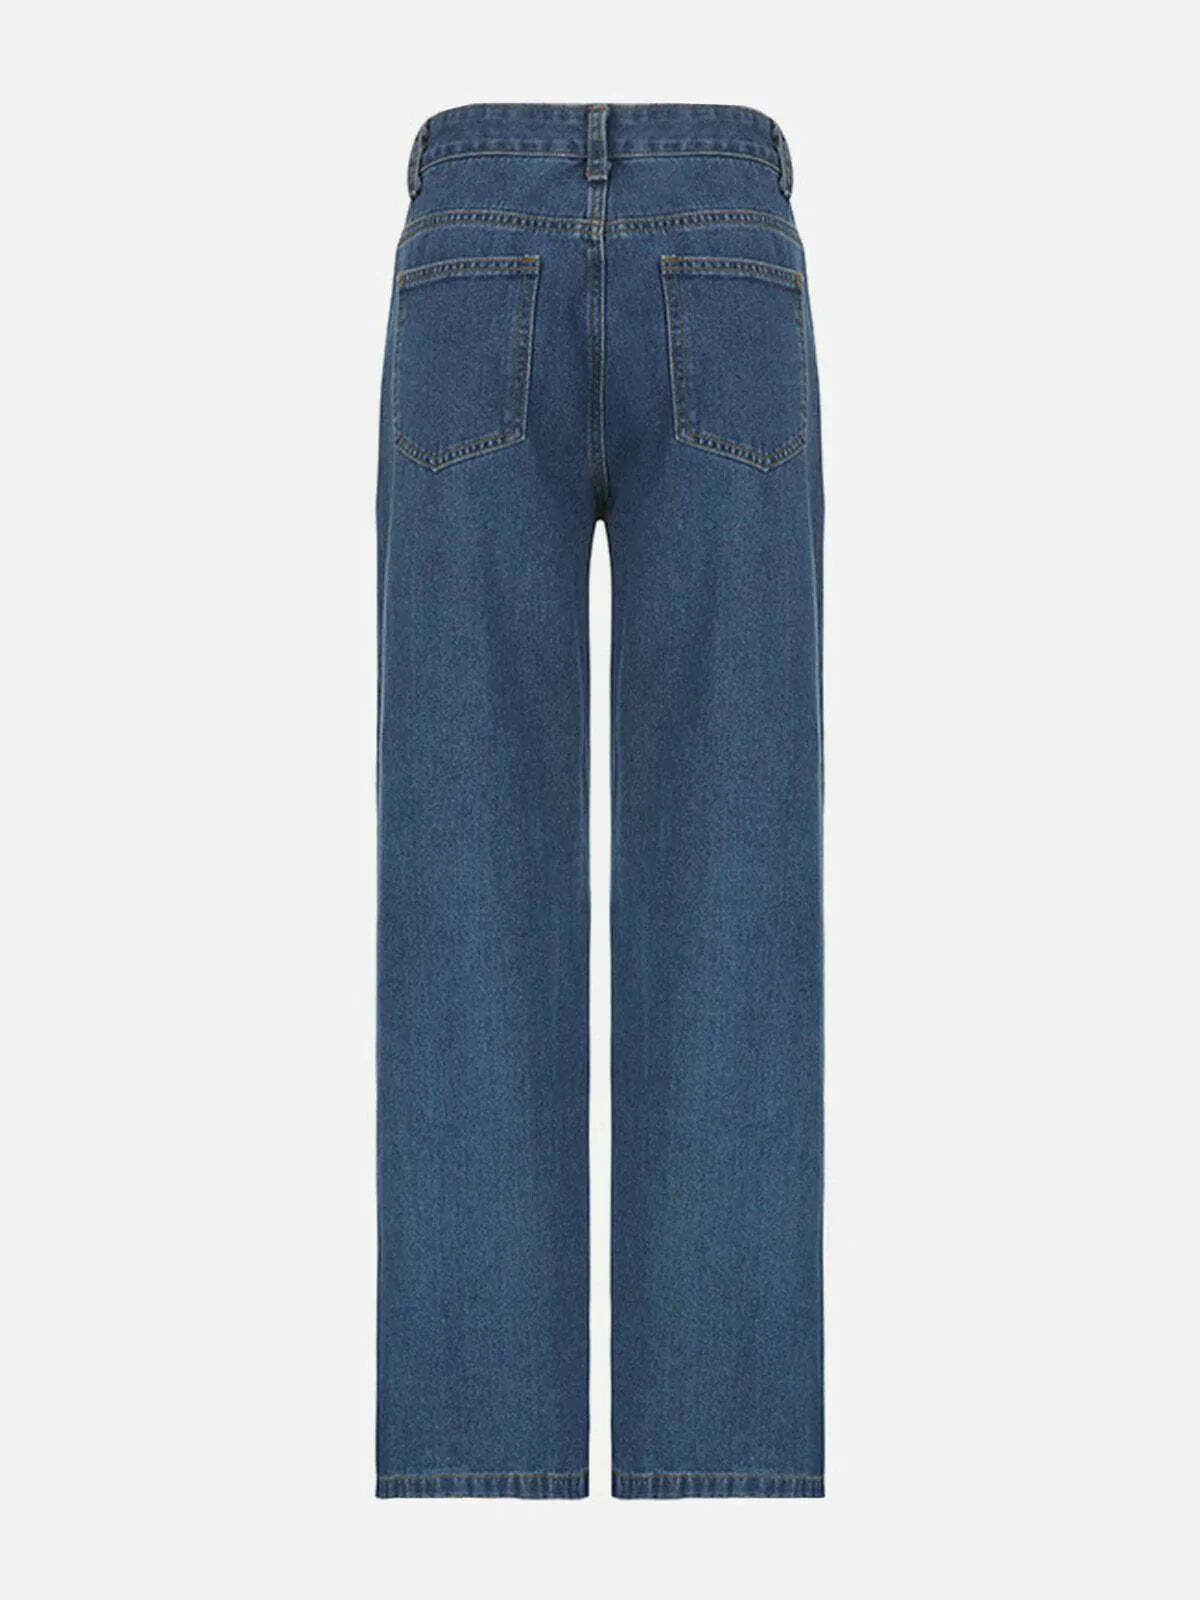 low waist streetwear jeans edgy retro denim essential 4969